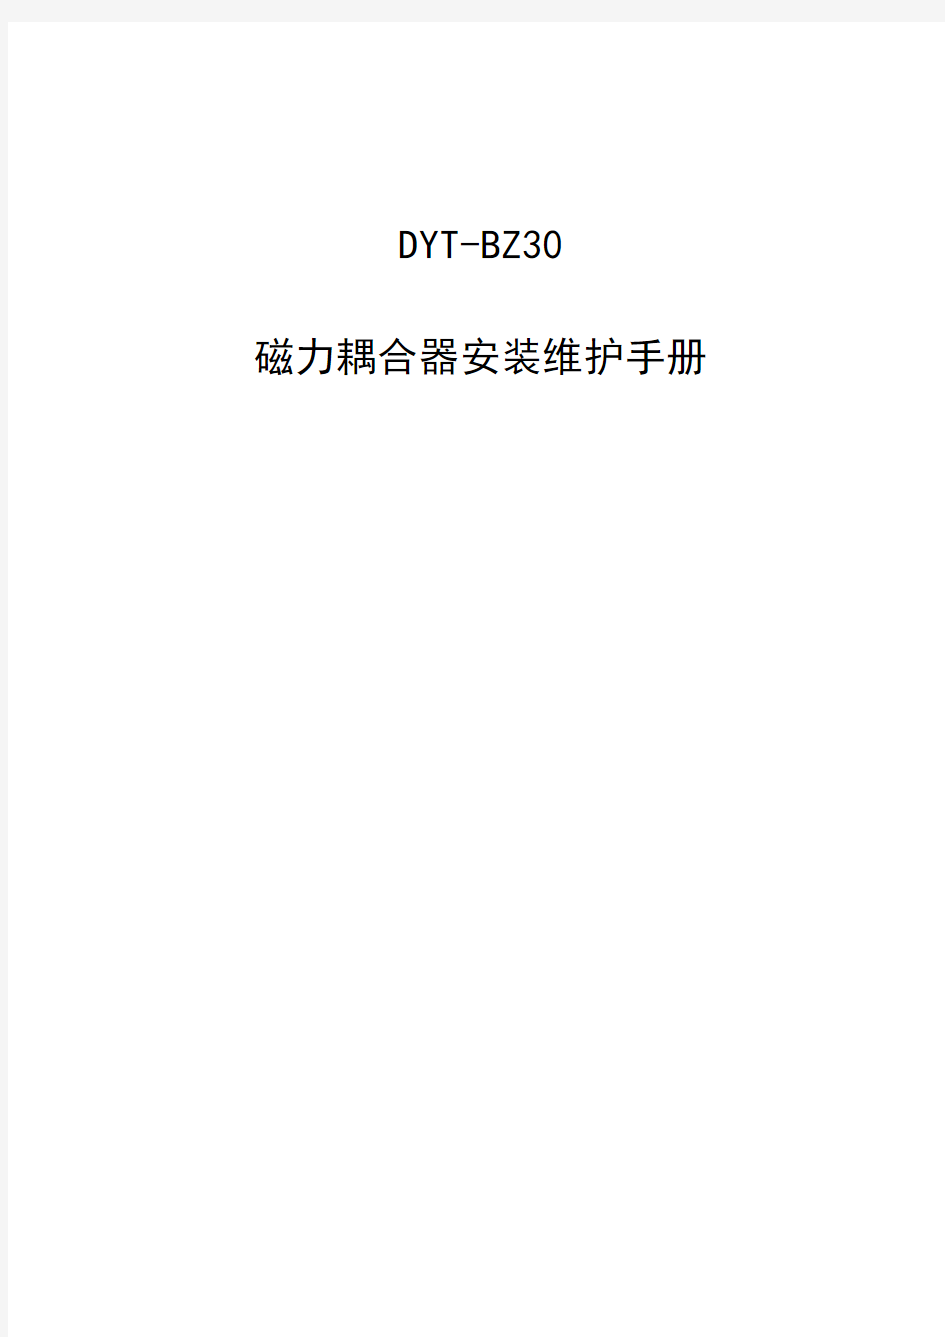 DYT BZ 磁力耦合器安装维护手册(DYT-BZ30)